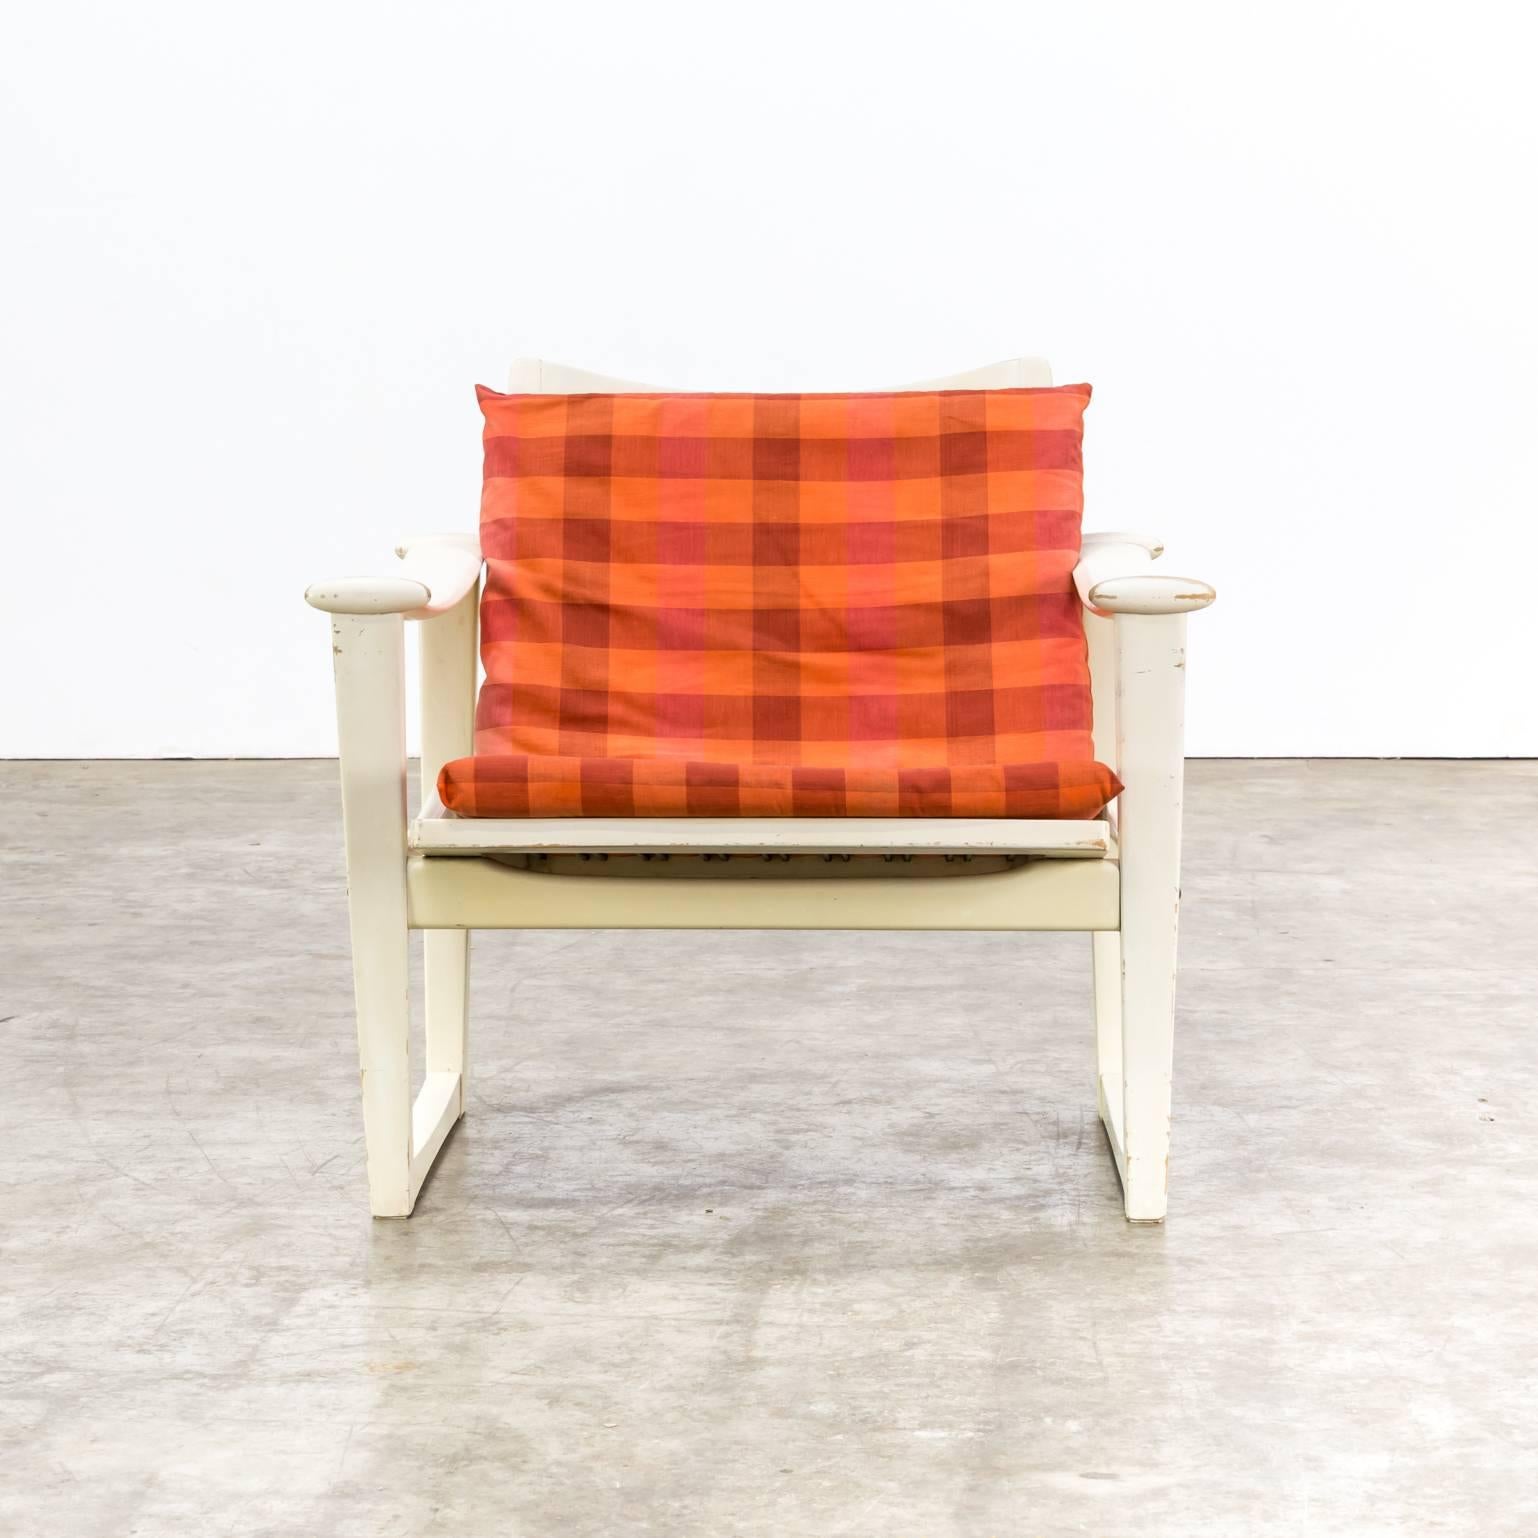 1960s Finn Juhl easy chair for Pastoe. Original condition, fabric original, lacquer usage spurs.